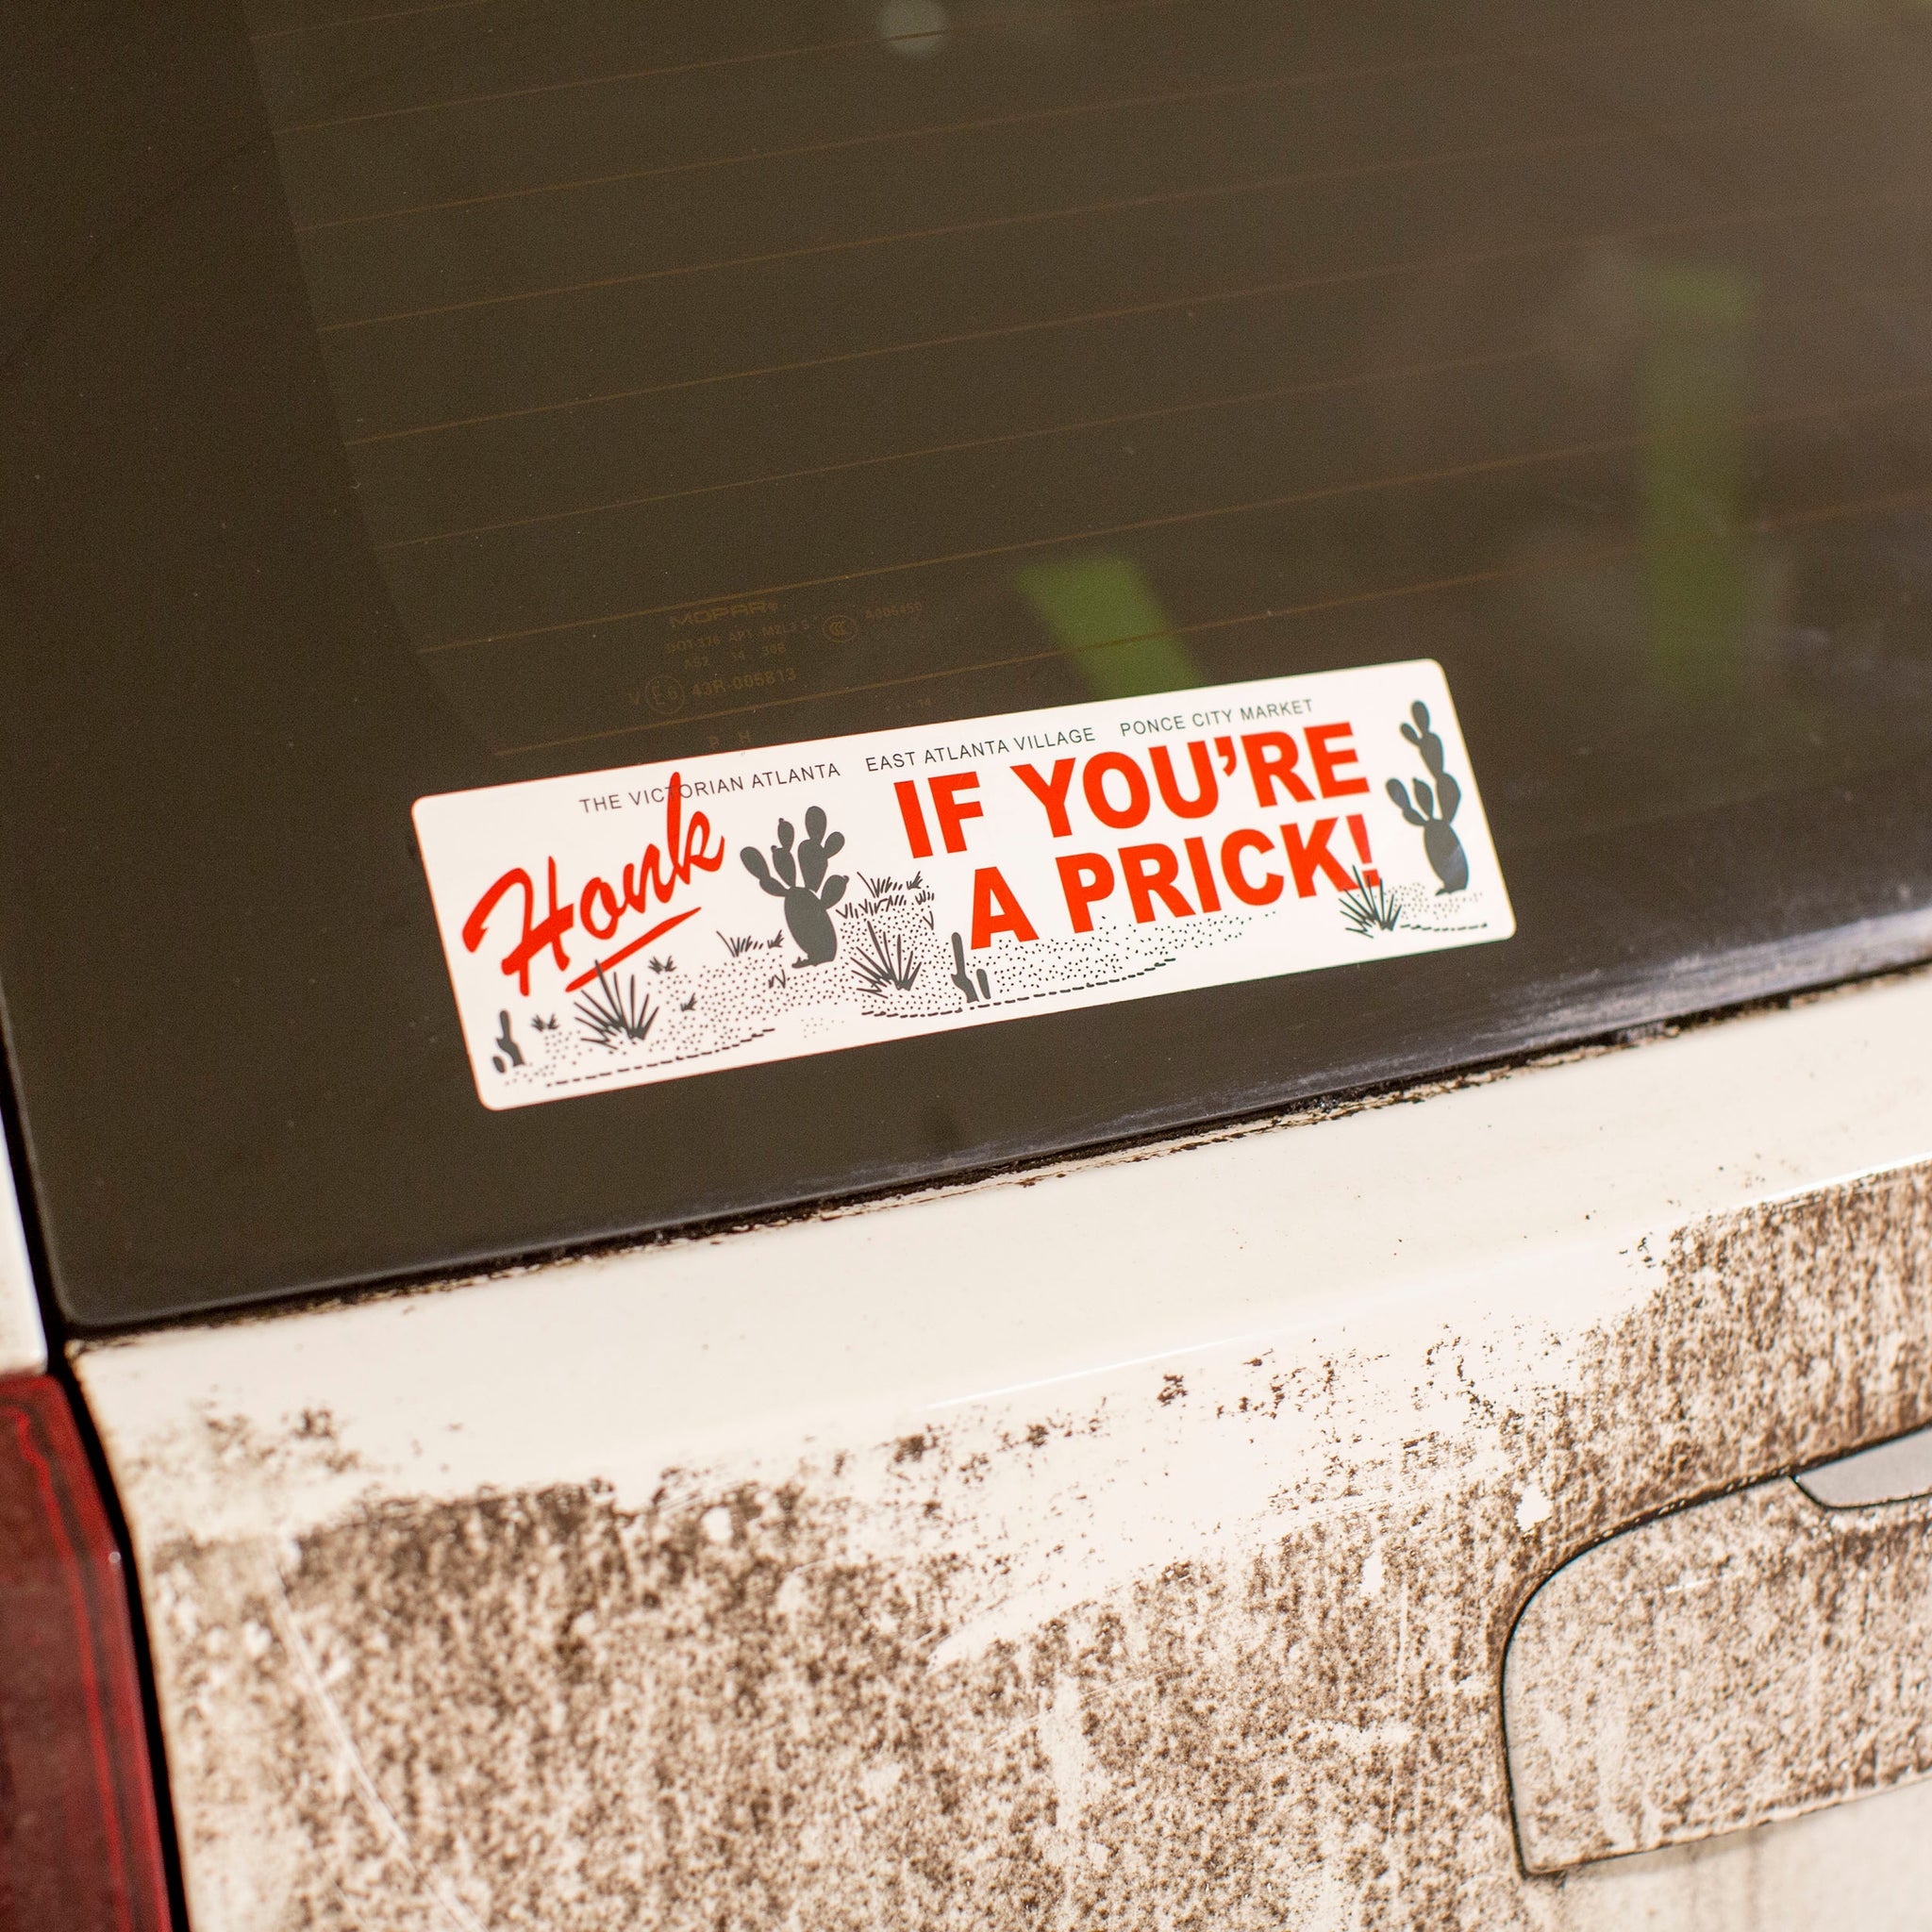 Bumper Sticker - Honk If You're a Prick!